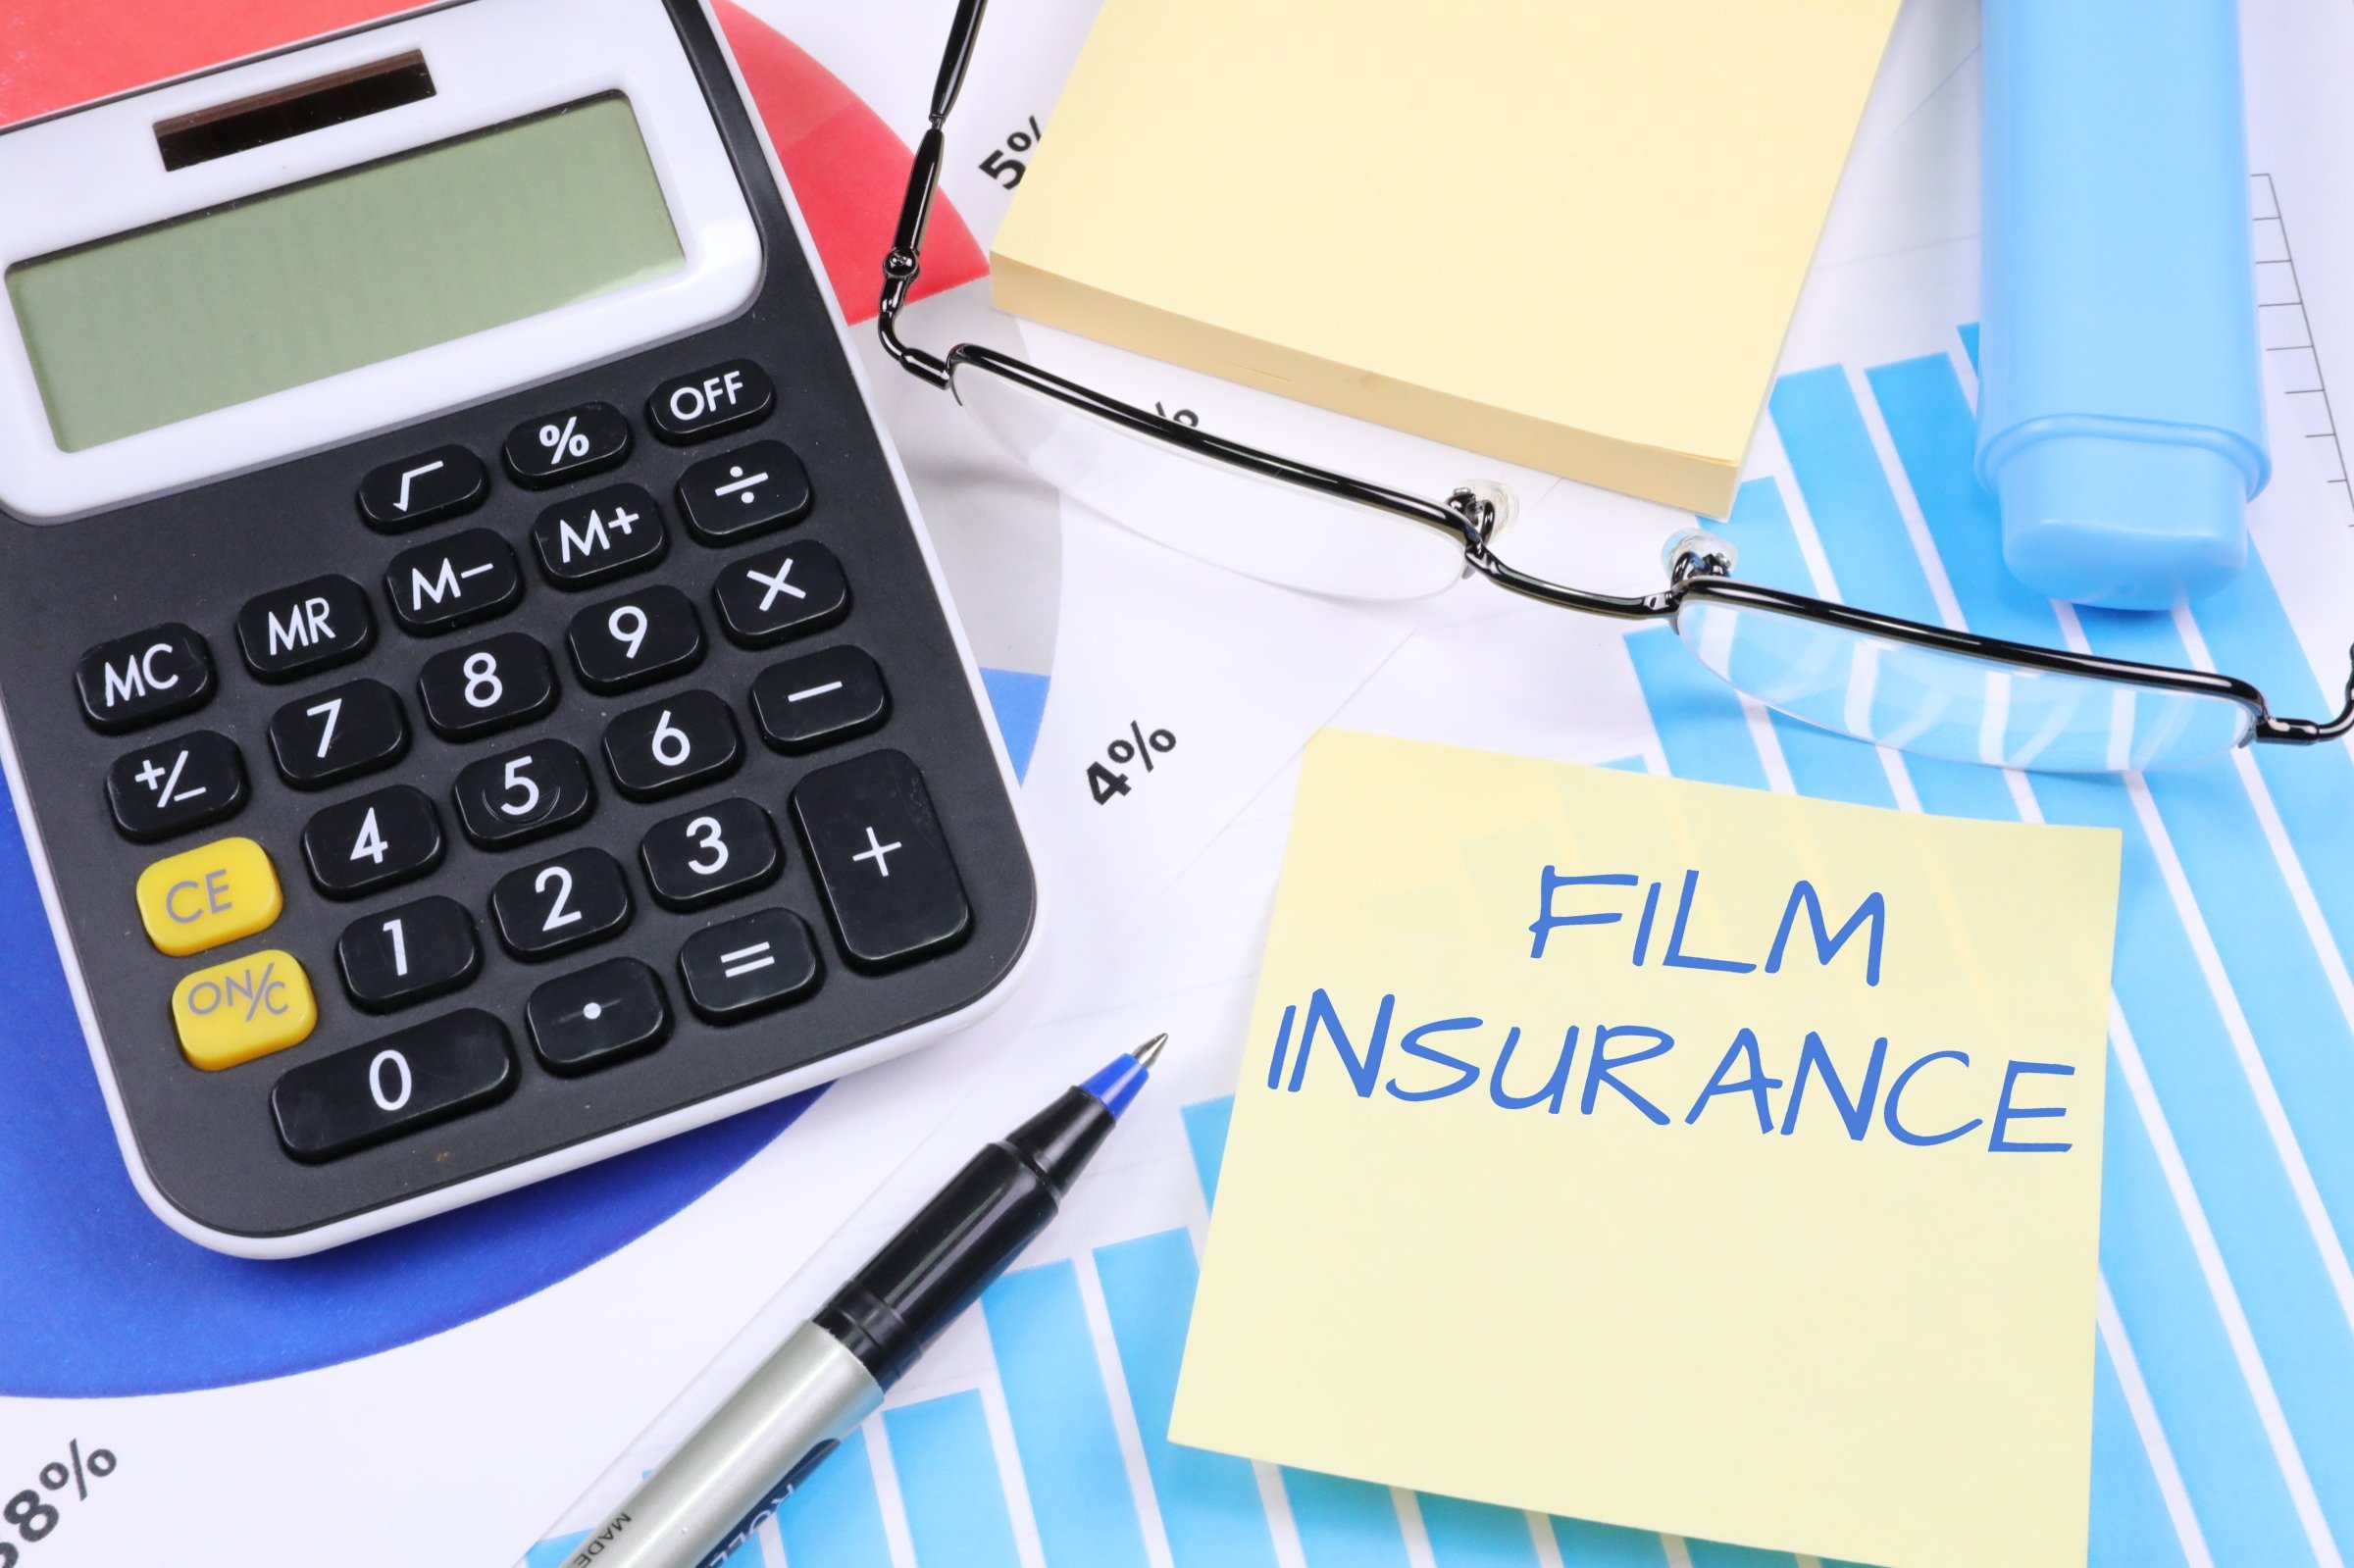 Film Insurance